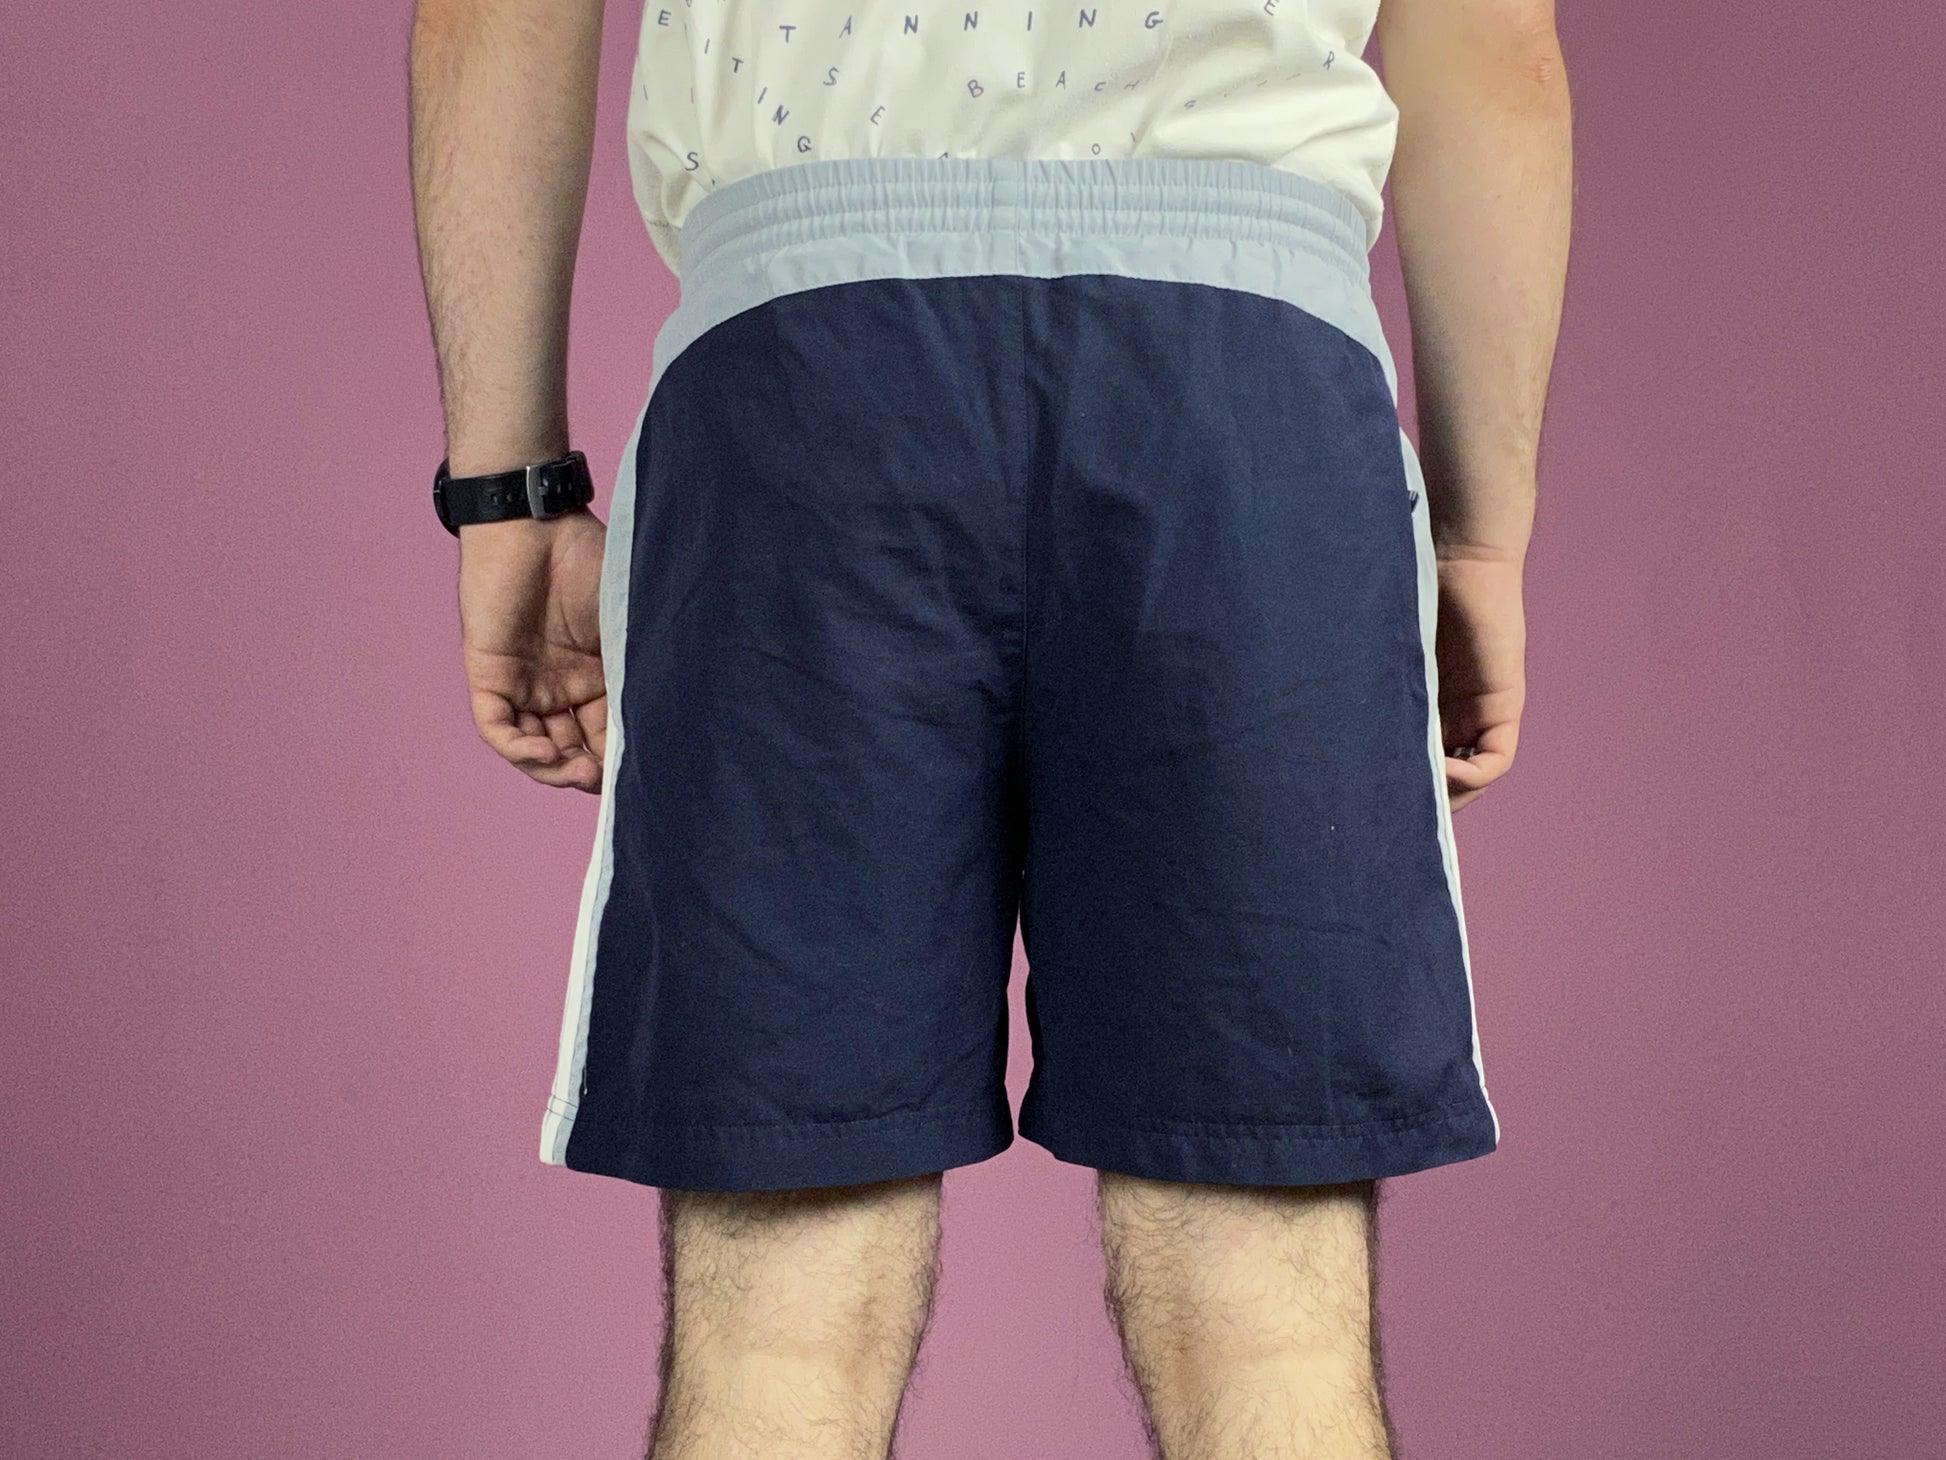 Adidas Vintage Men's Sport Shorts - Small Navy Blue Polyester